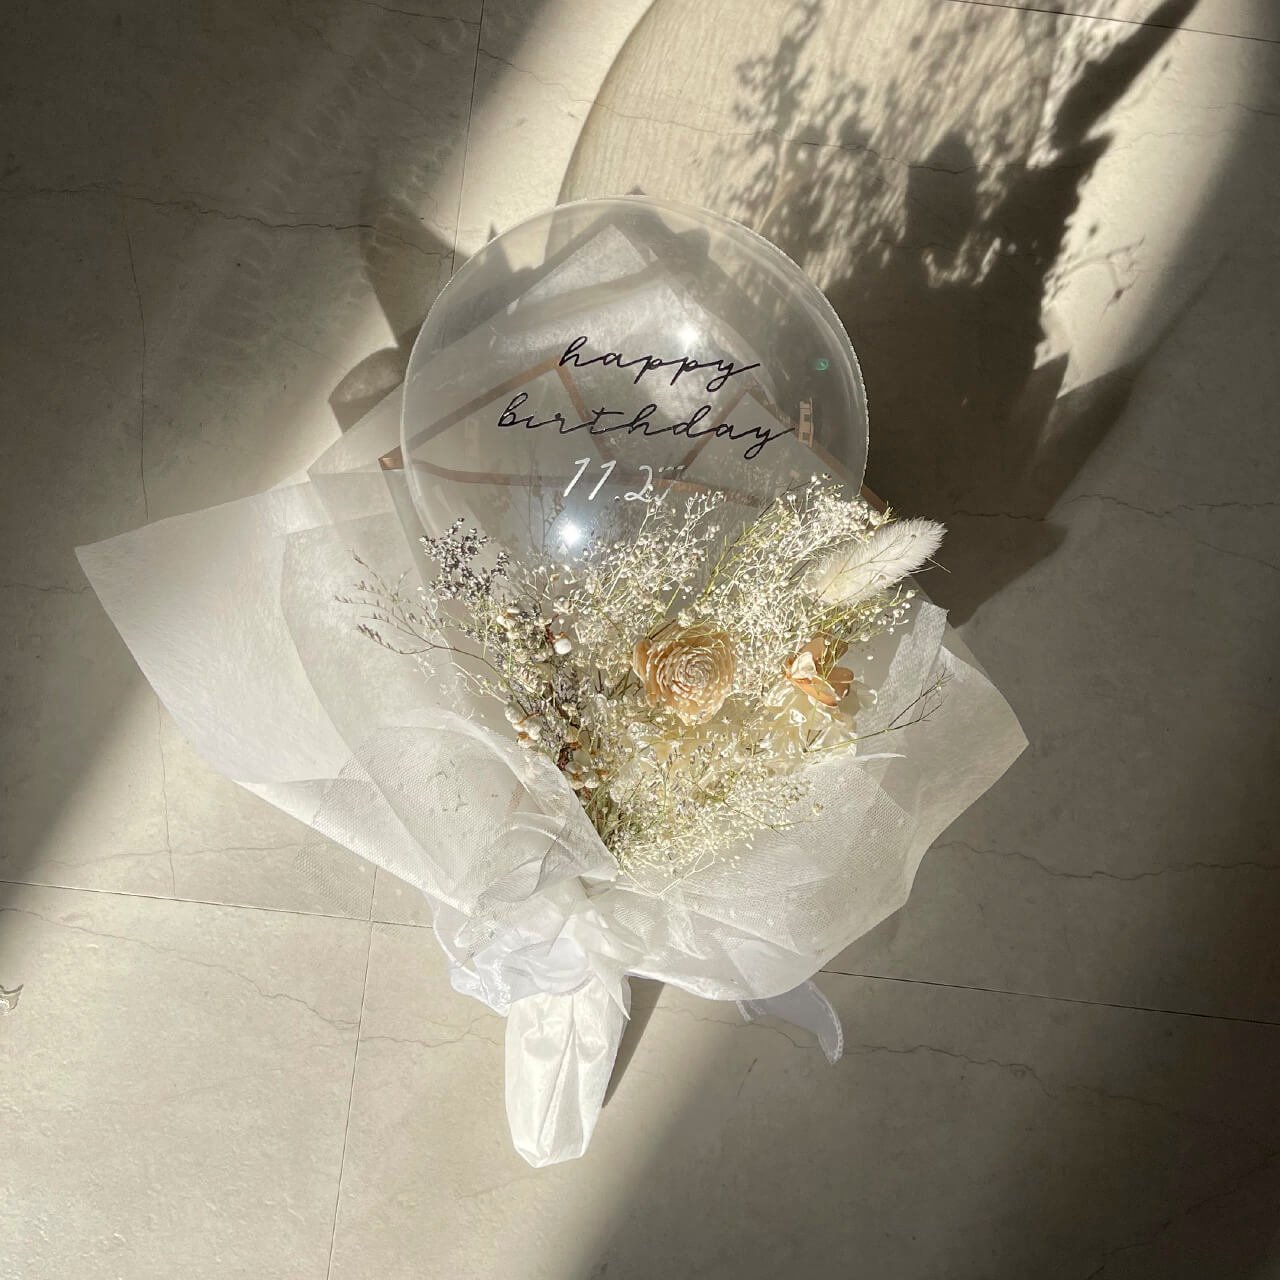 San bruno White Bouquet - Flower Balloon Bouquet - サンブルーノ ホワイト フラワーバルーンブーケ